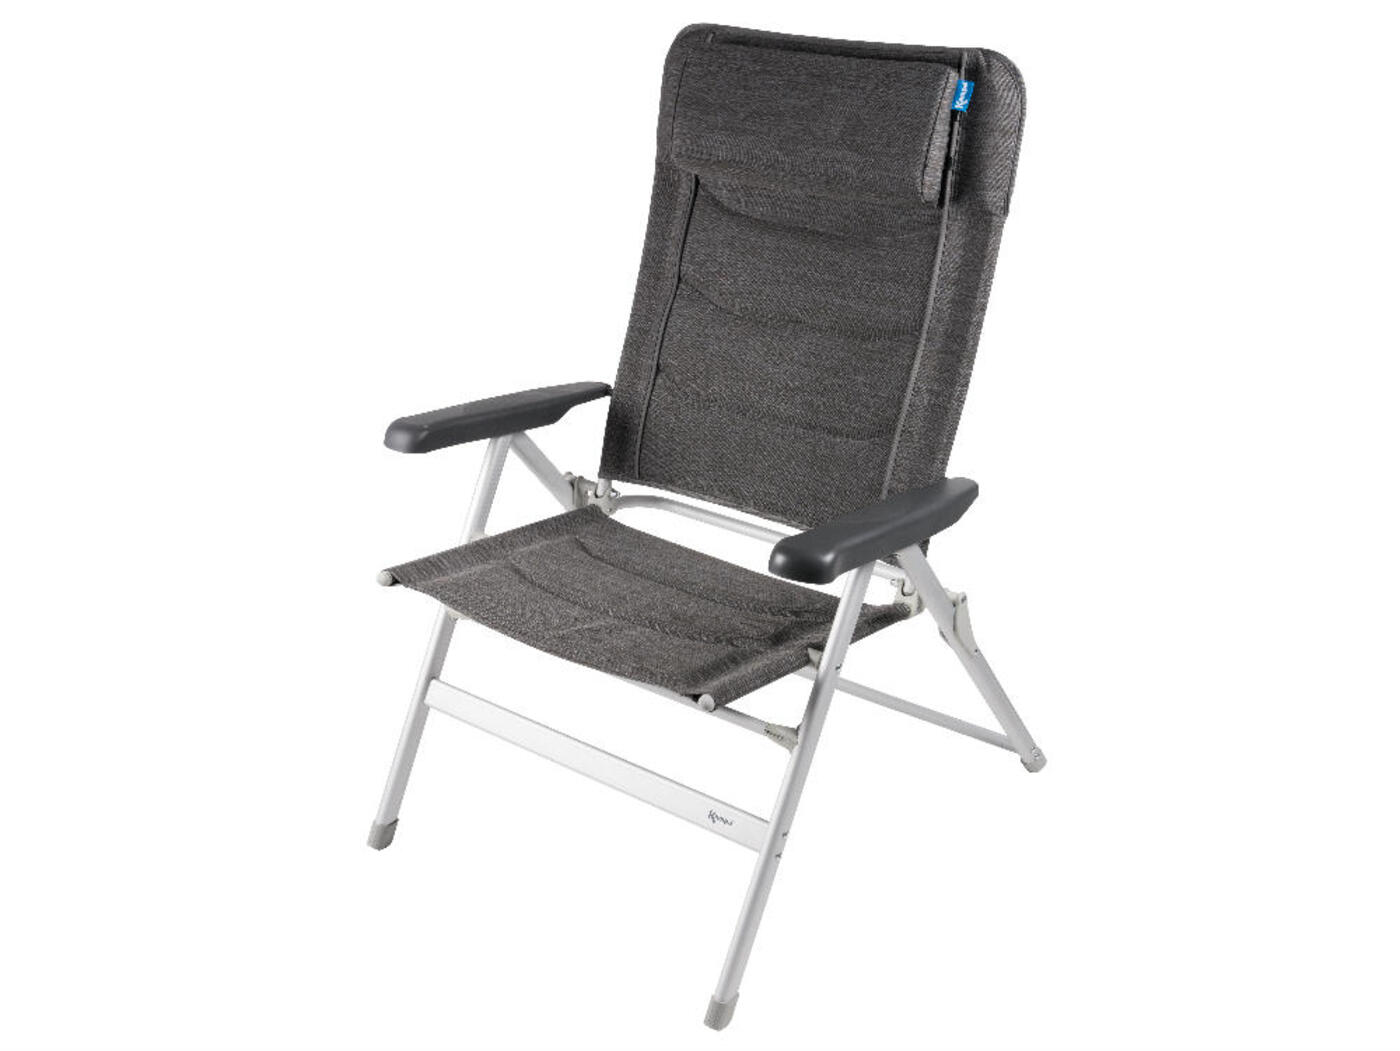 New Kampa Opulence Modena Deluxe Relaxer Chair Ideal Motorhomes Caravan Camping 